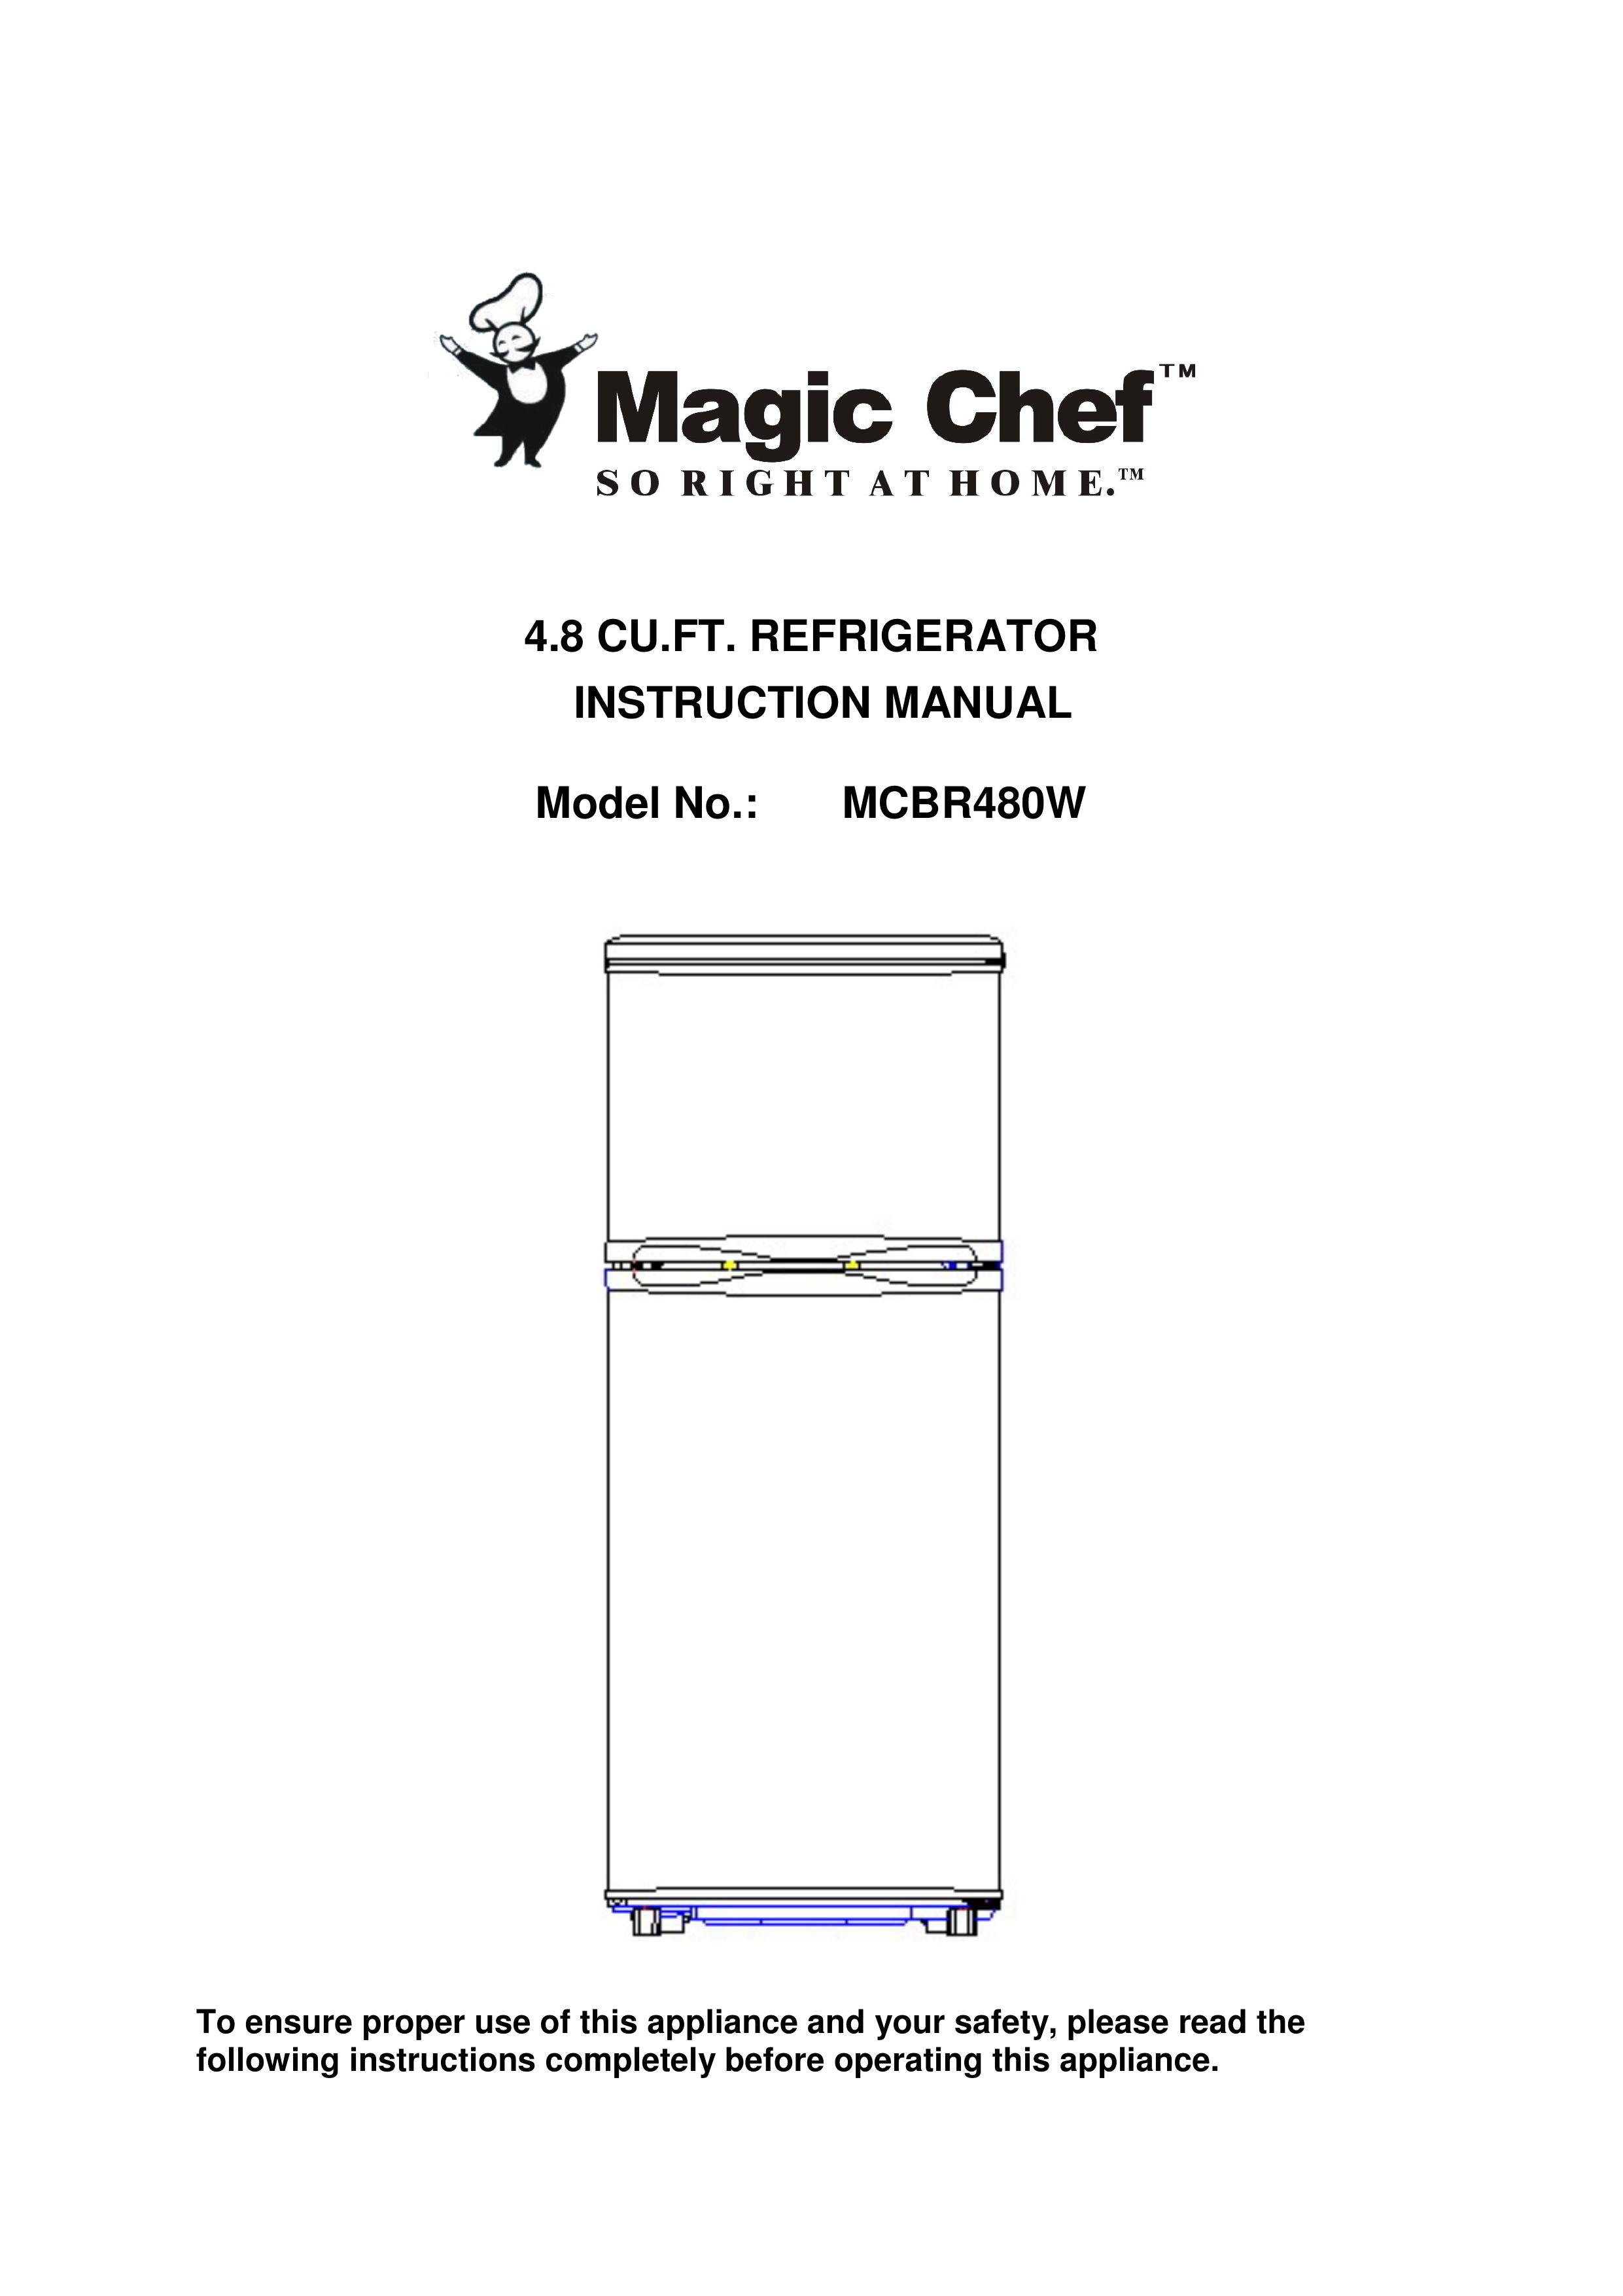 Magic Chef MCBR480W Refrigerator User Manual